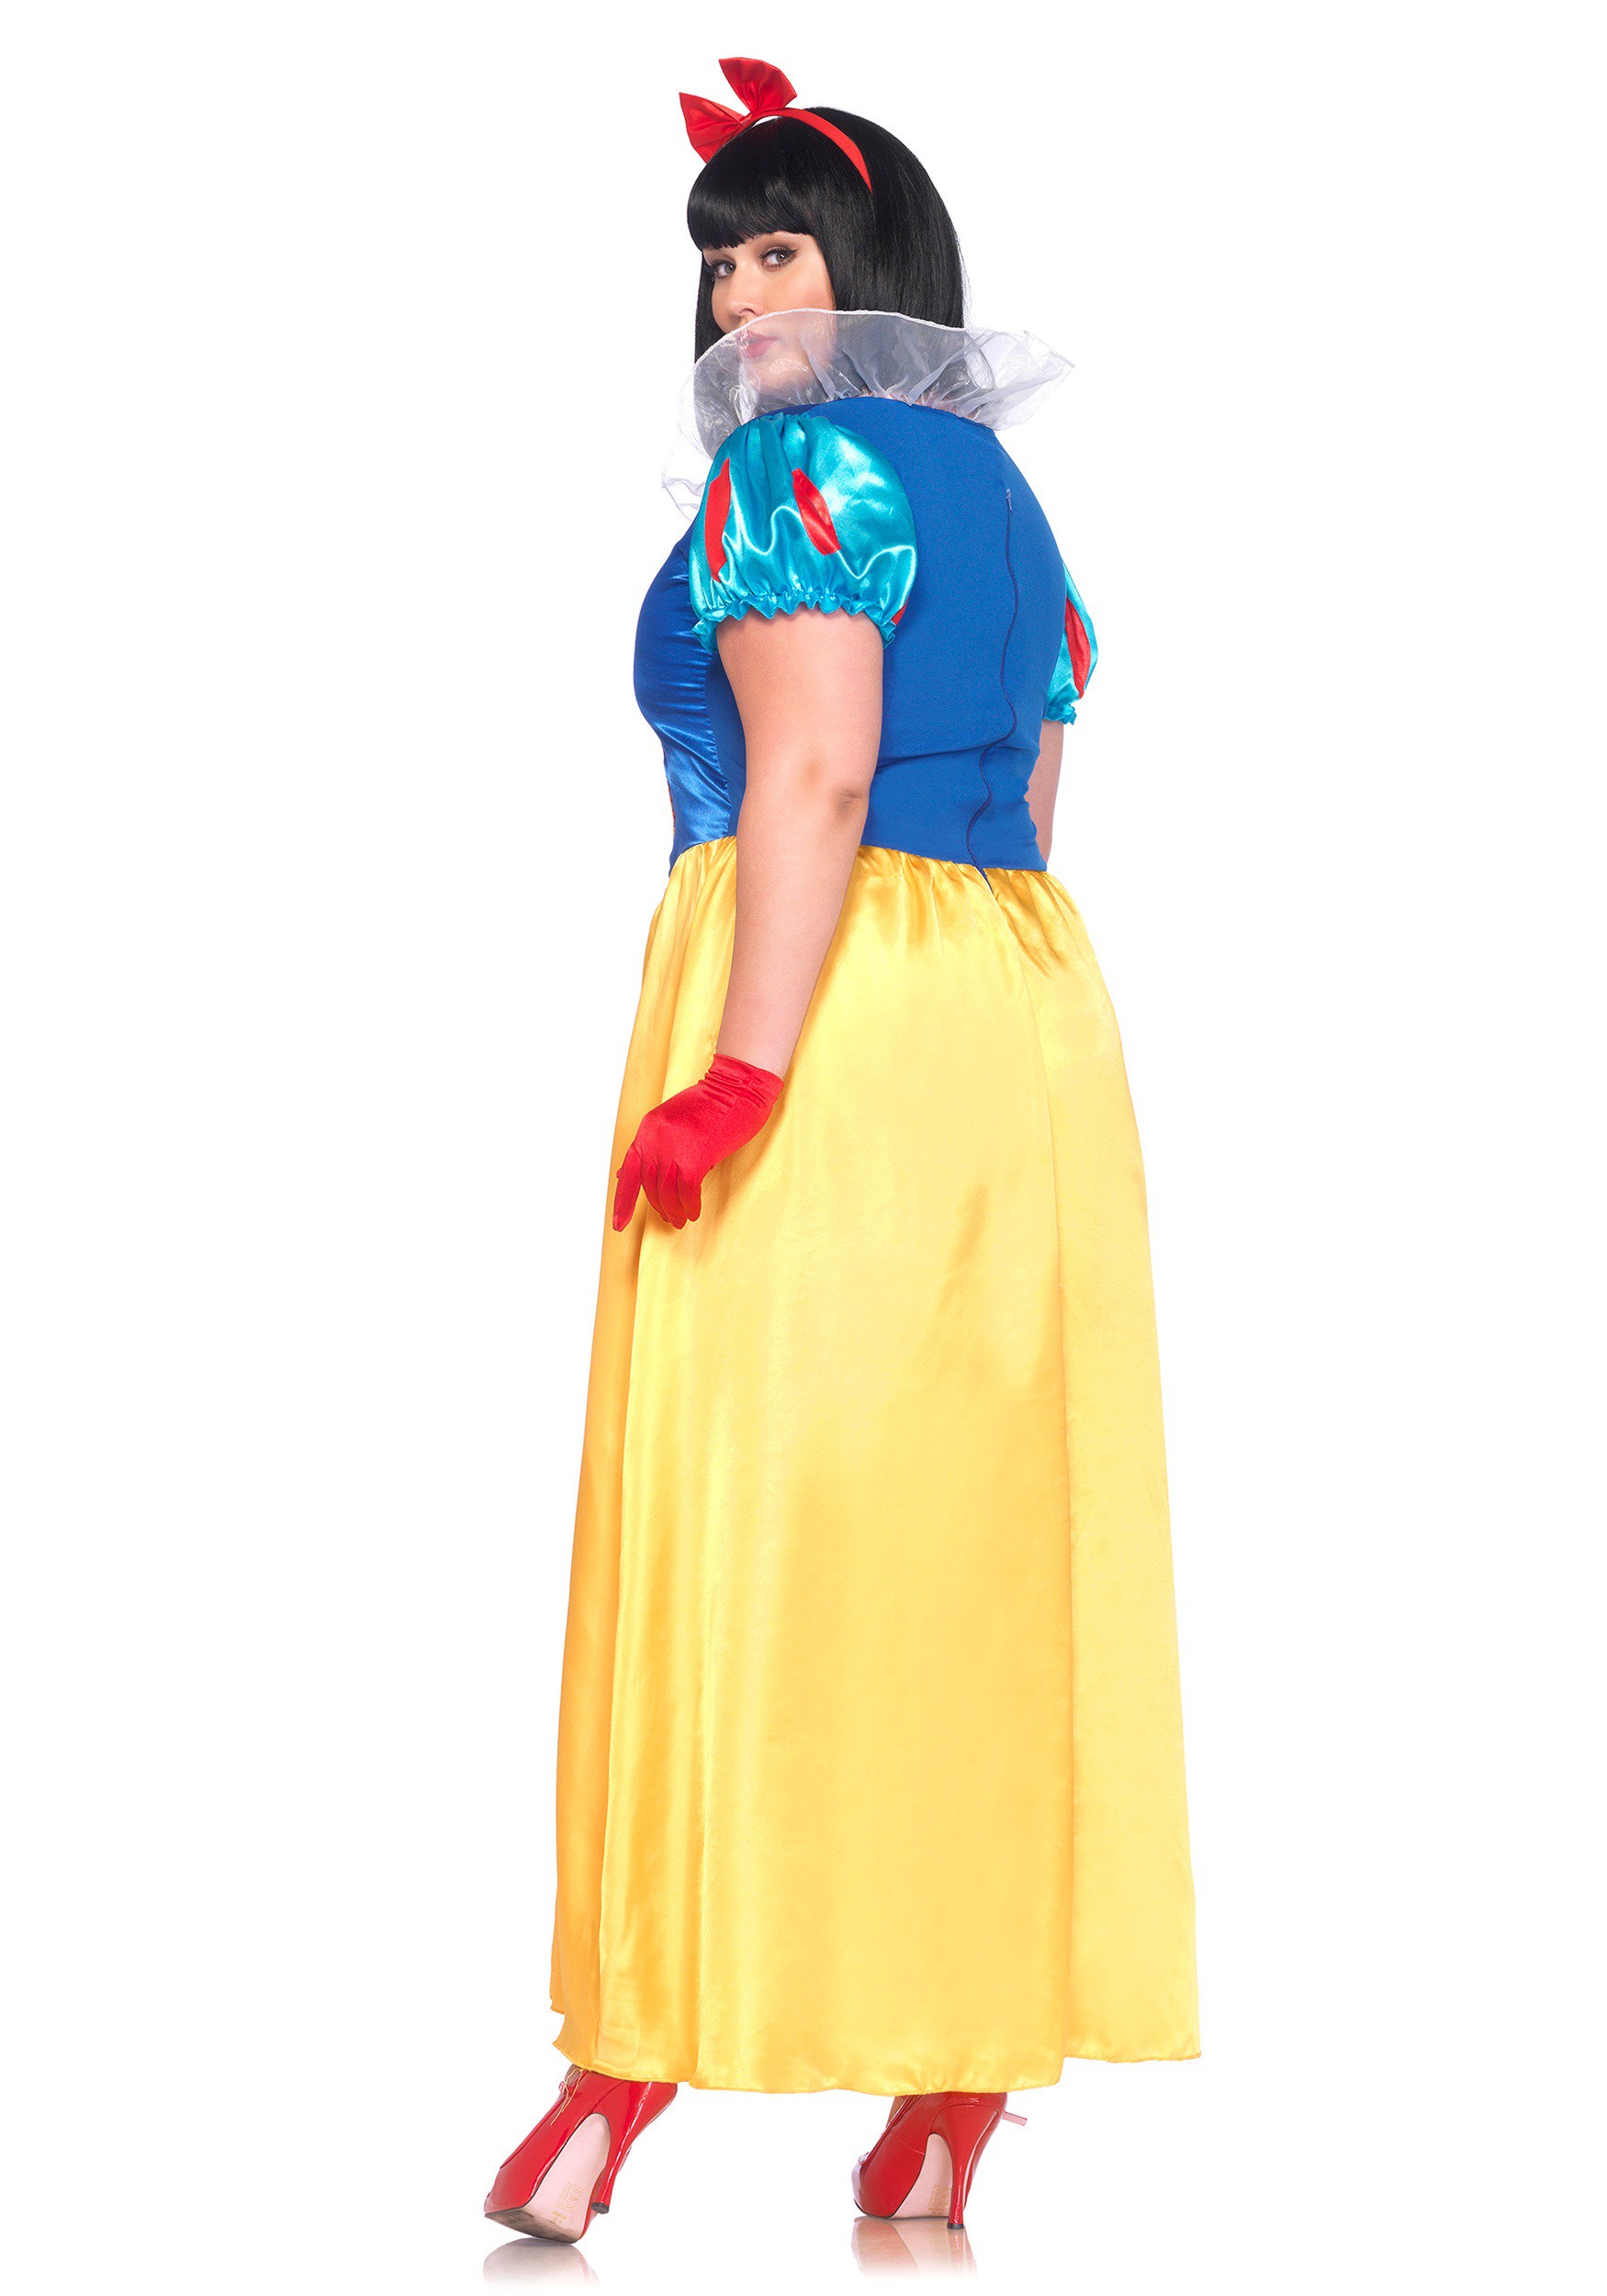 Plus Size Women S Classic Snow White Costume